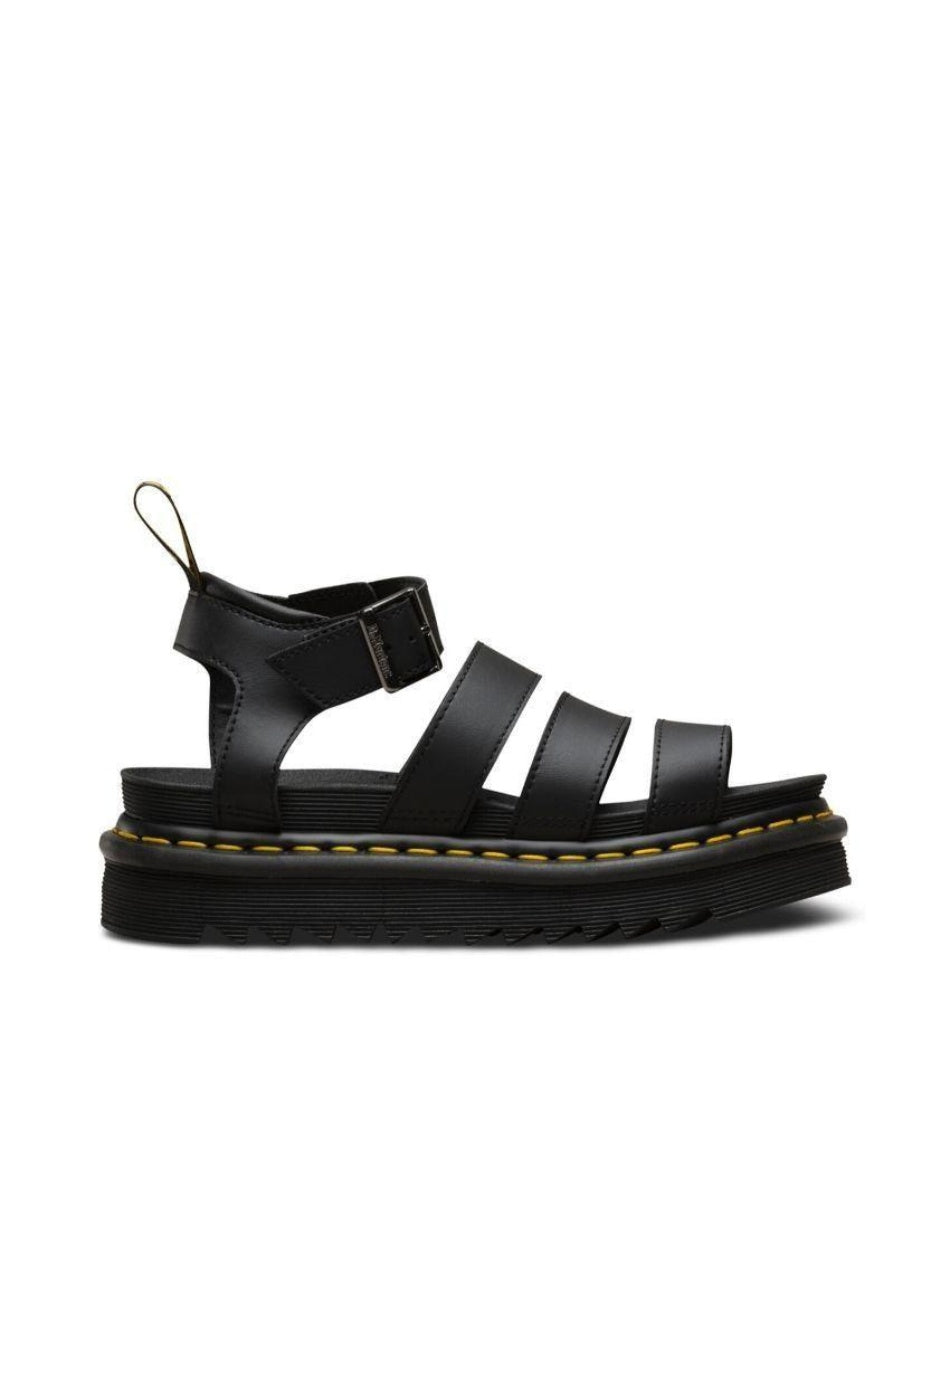 Blaire Hydro Sandal - Black-Dr Martens-P&K The General Store